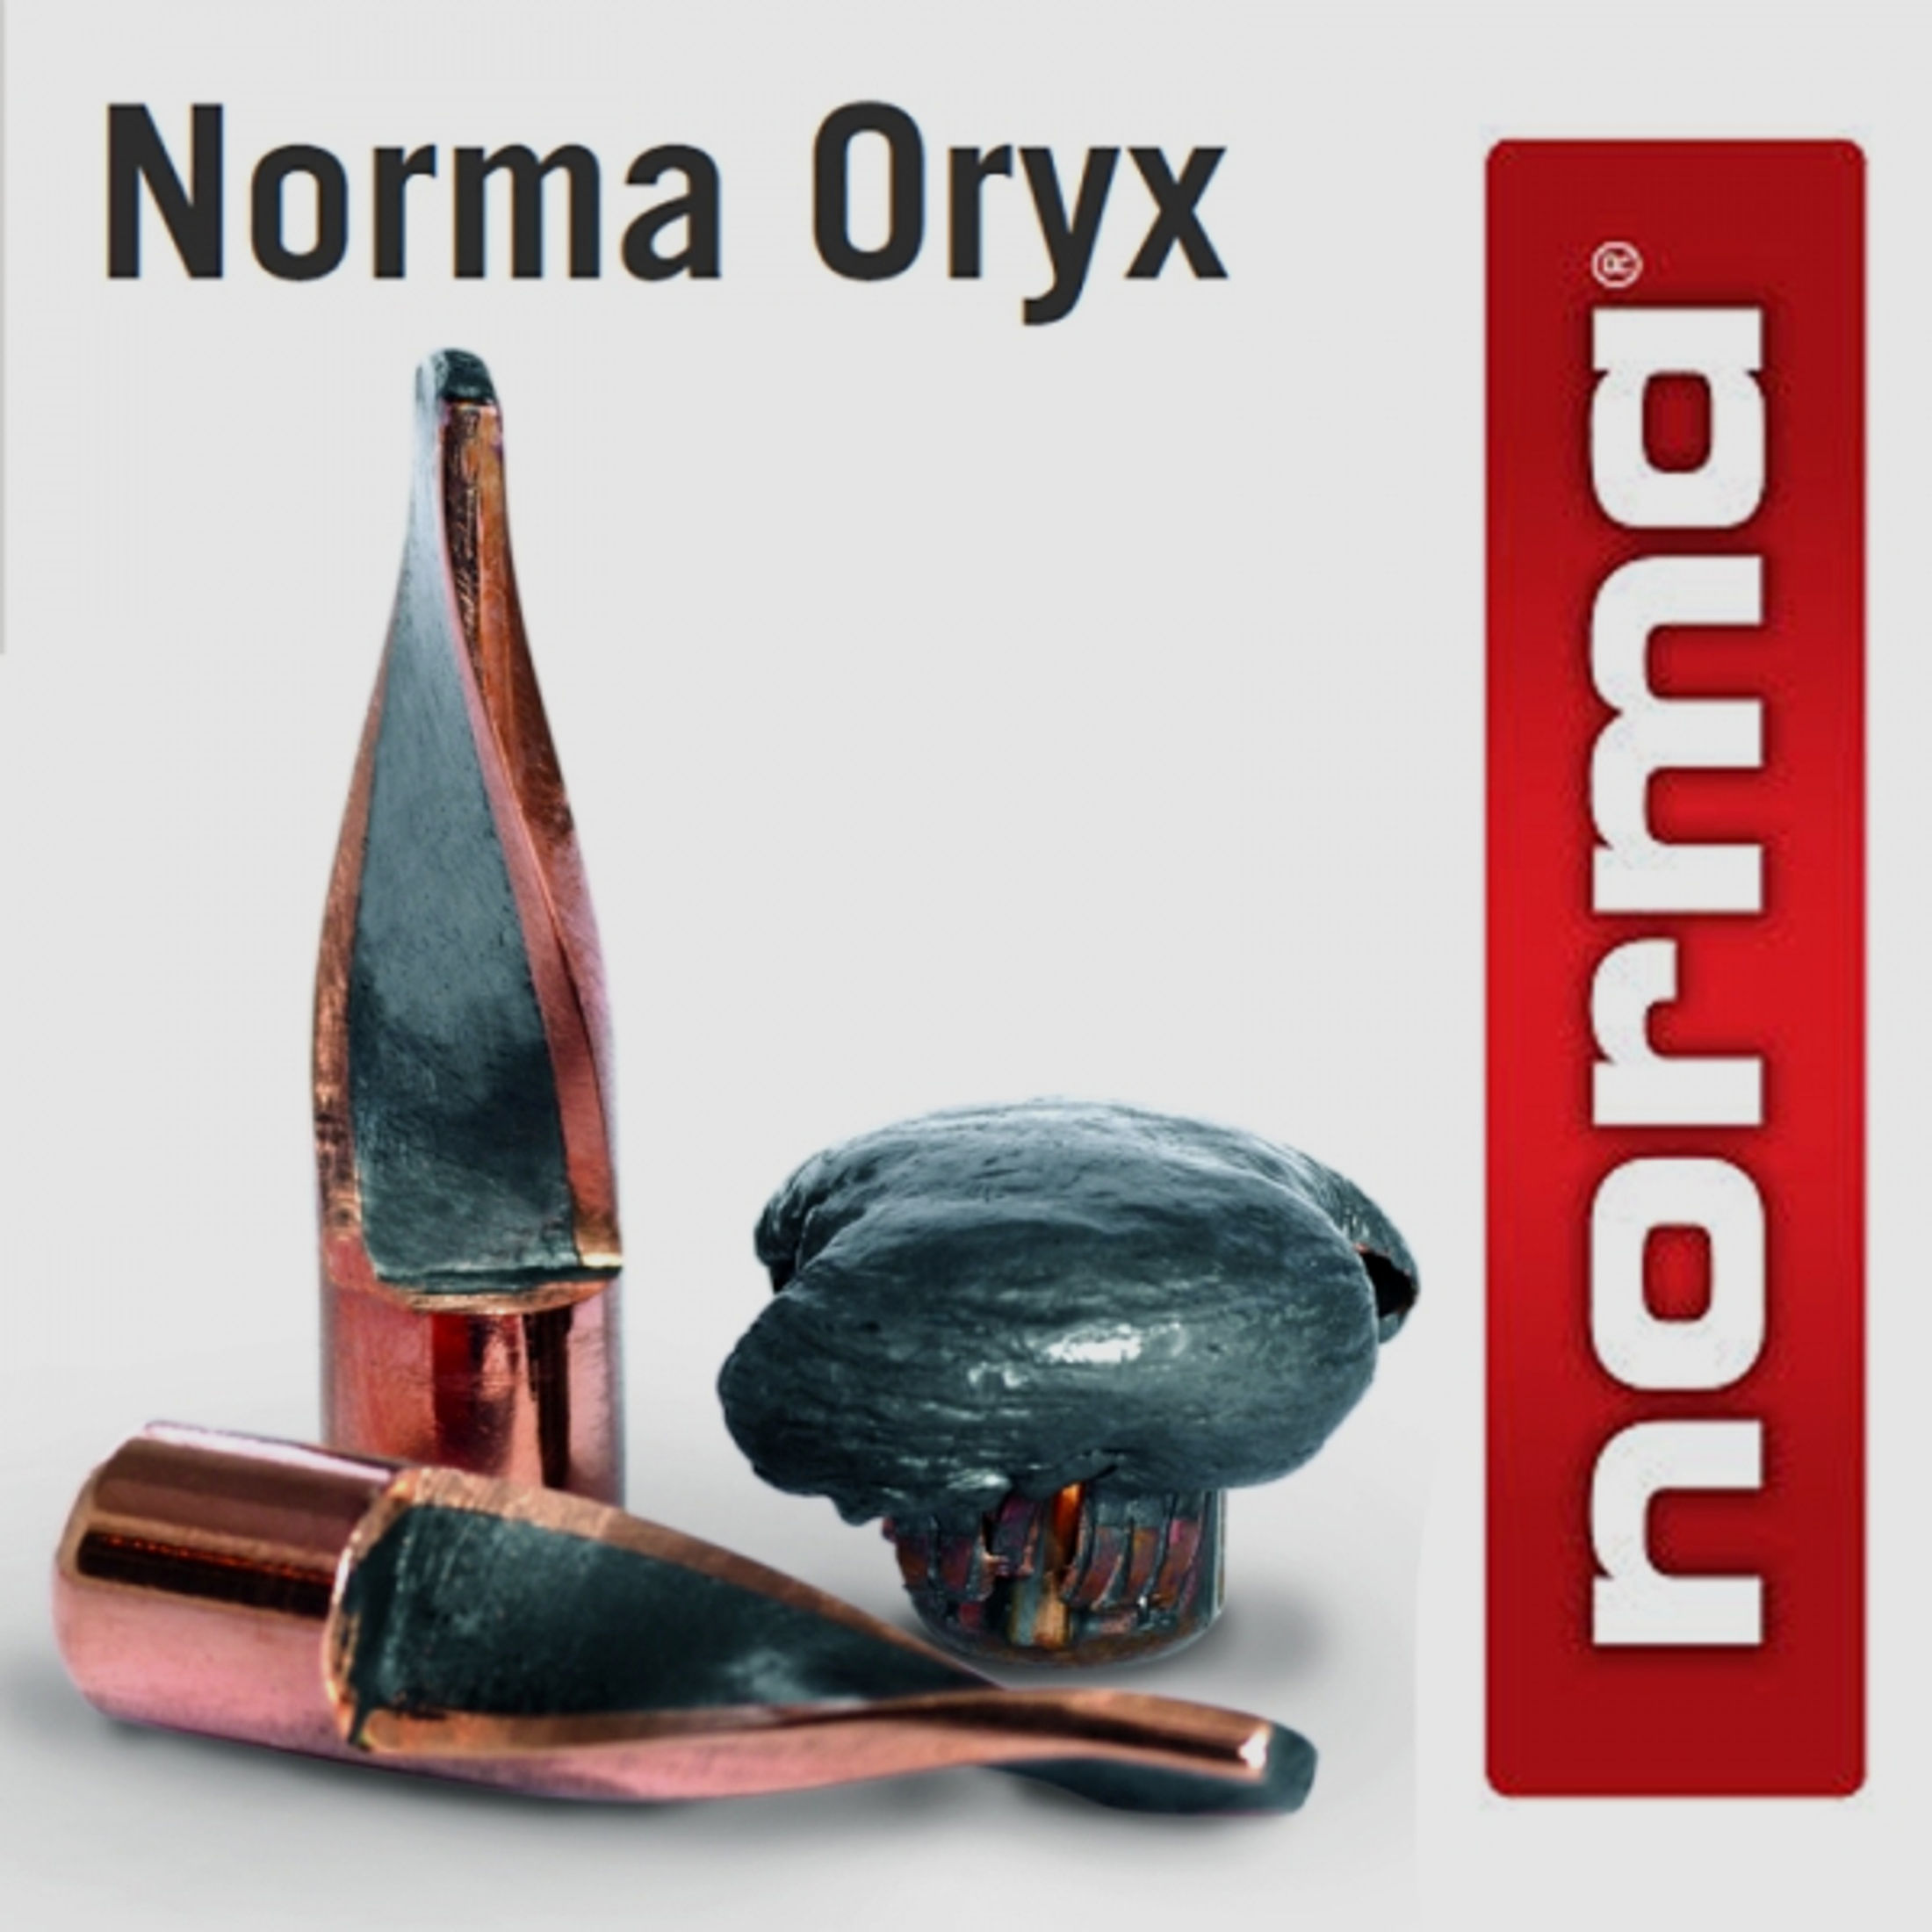 100 Stück NEUE NORMA Geschosse-NEW-ORYX .308/7,62- 10,7g/165gr #20676161 Deformationsgeschoss/Bonded